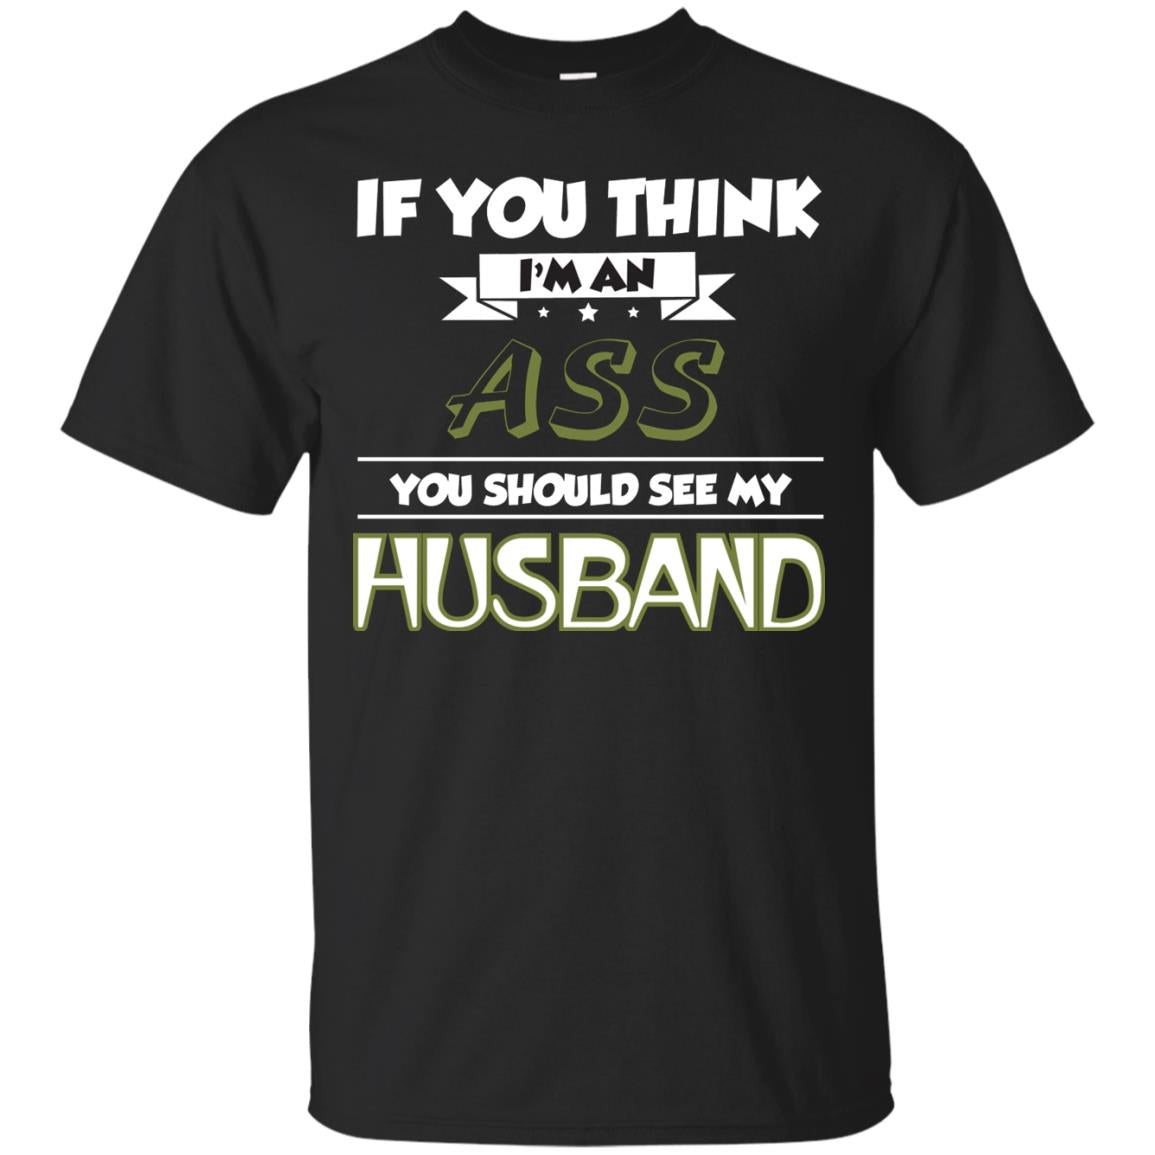 If You Think I_m An Ass You Should See My Husband Shirt For WifeG200 Gildan Ultra Cotton T-Shirt